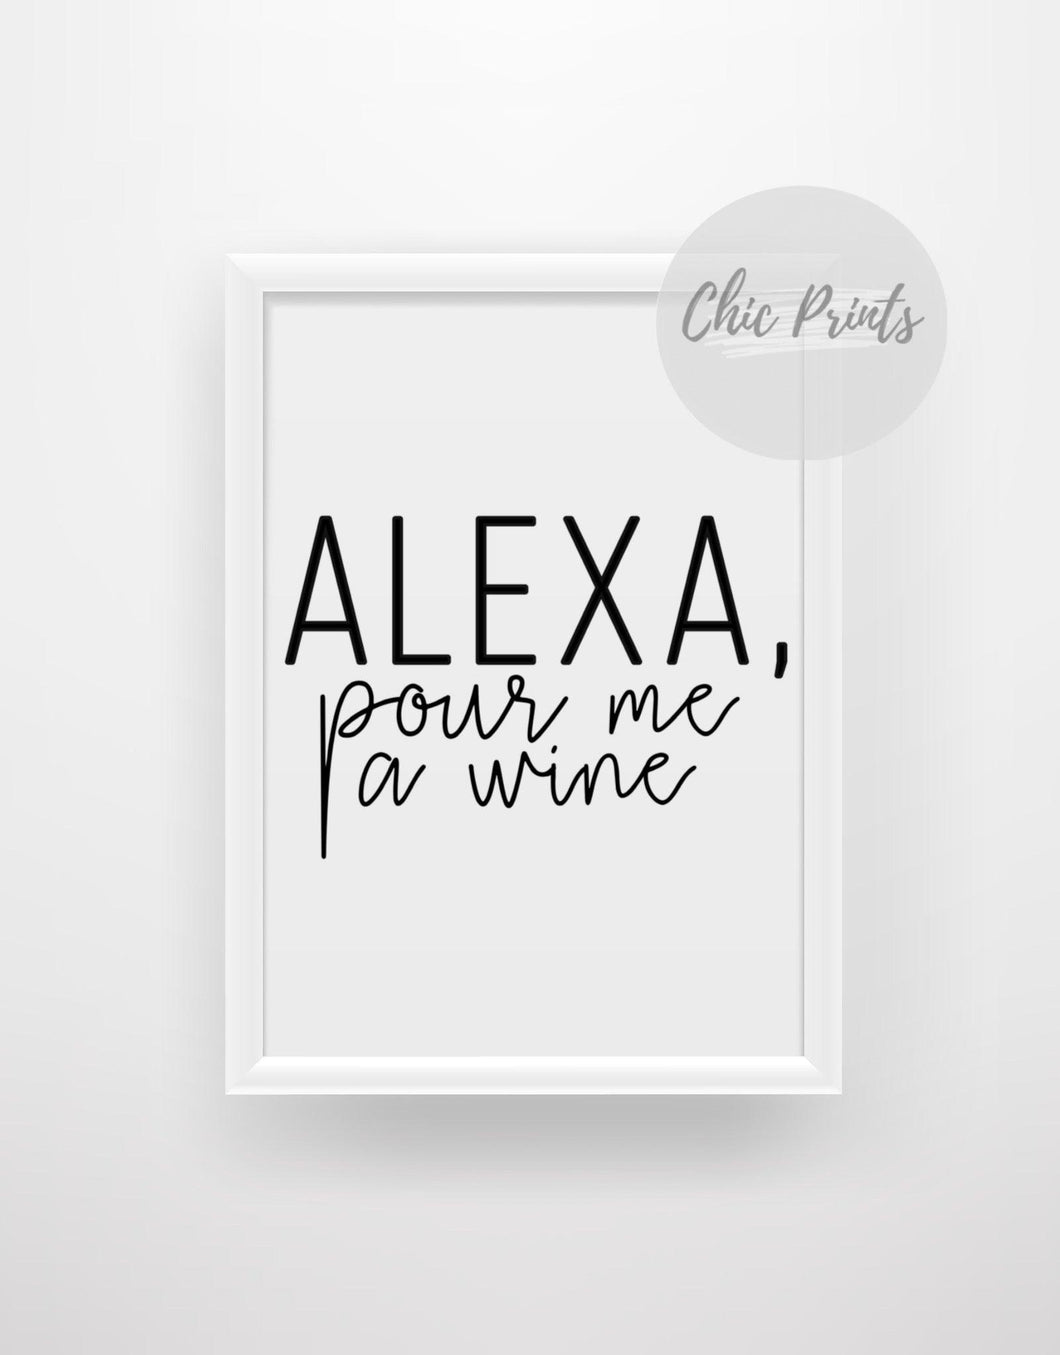 Alexa, pour me a wine - Chic Prints